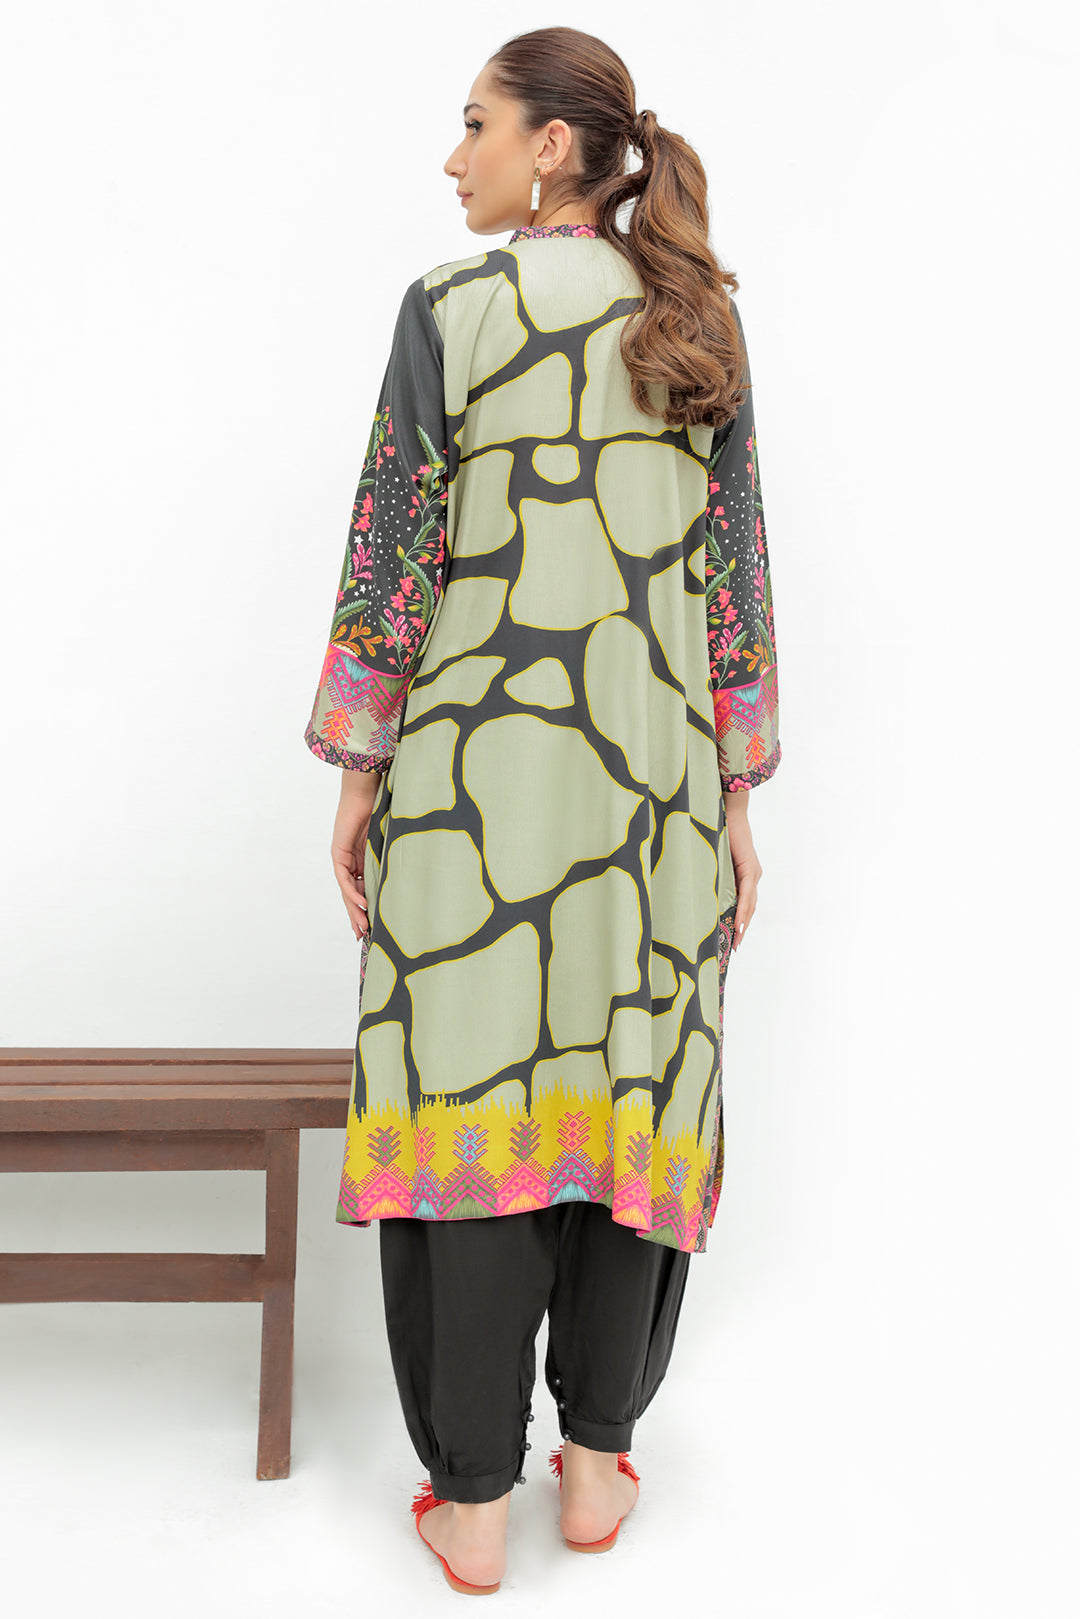 1 Piece - Digital Printed Cotail Shirt P0210